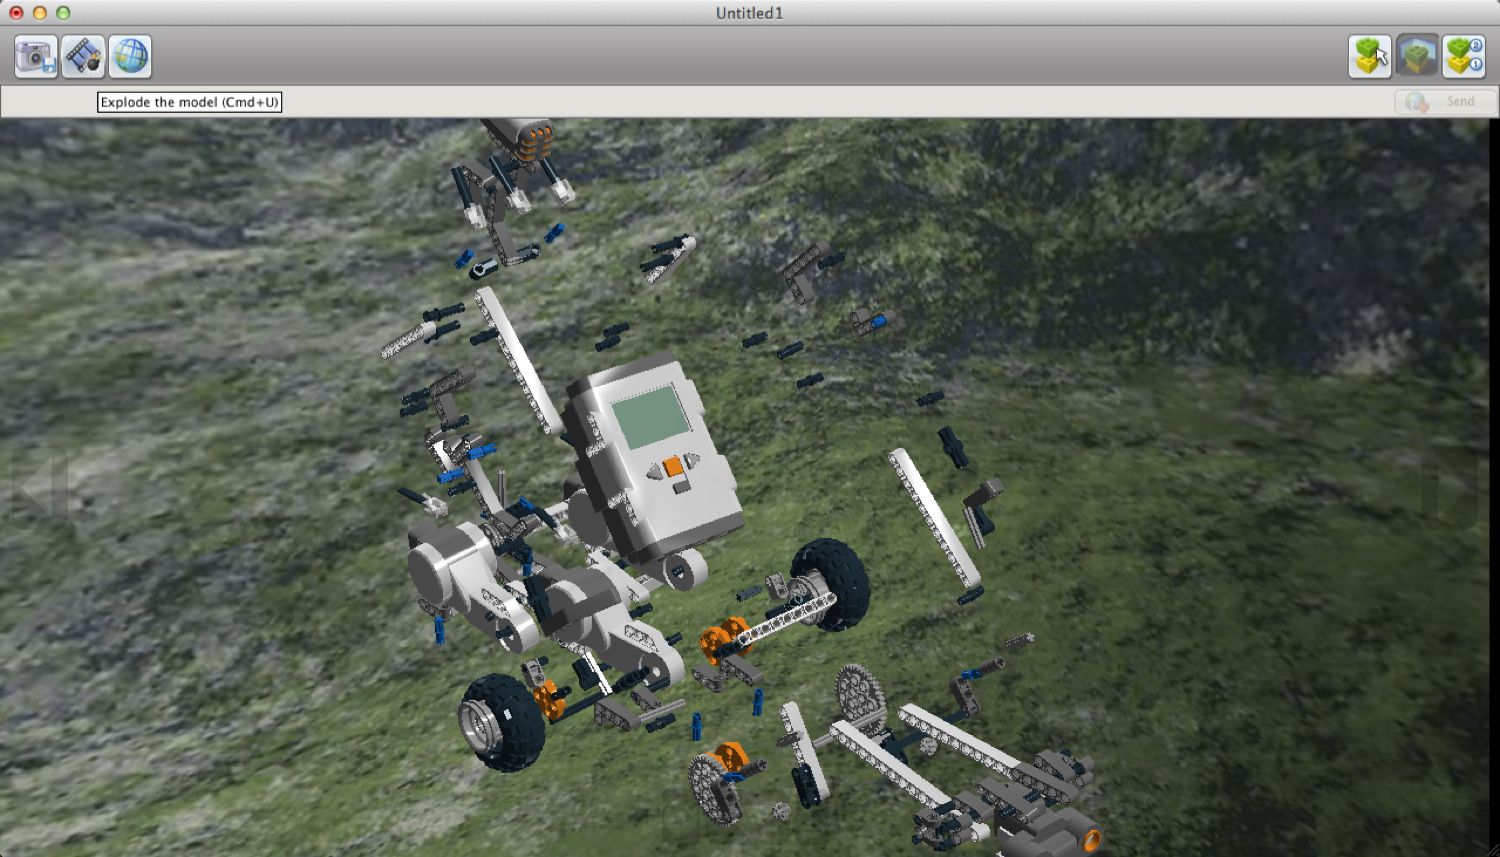 LEGO Digital Designer : Model Explosion